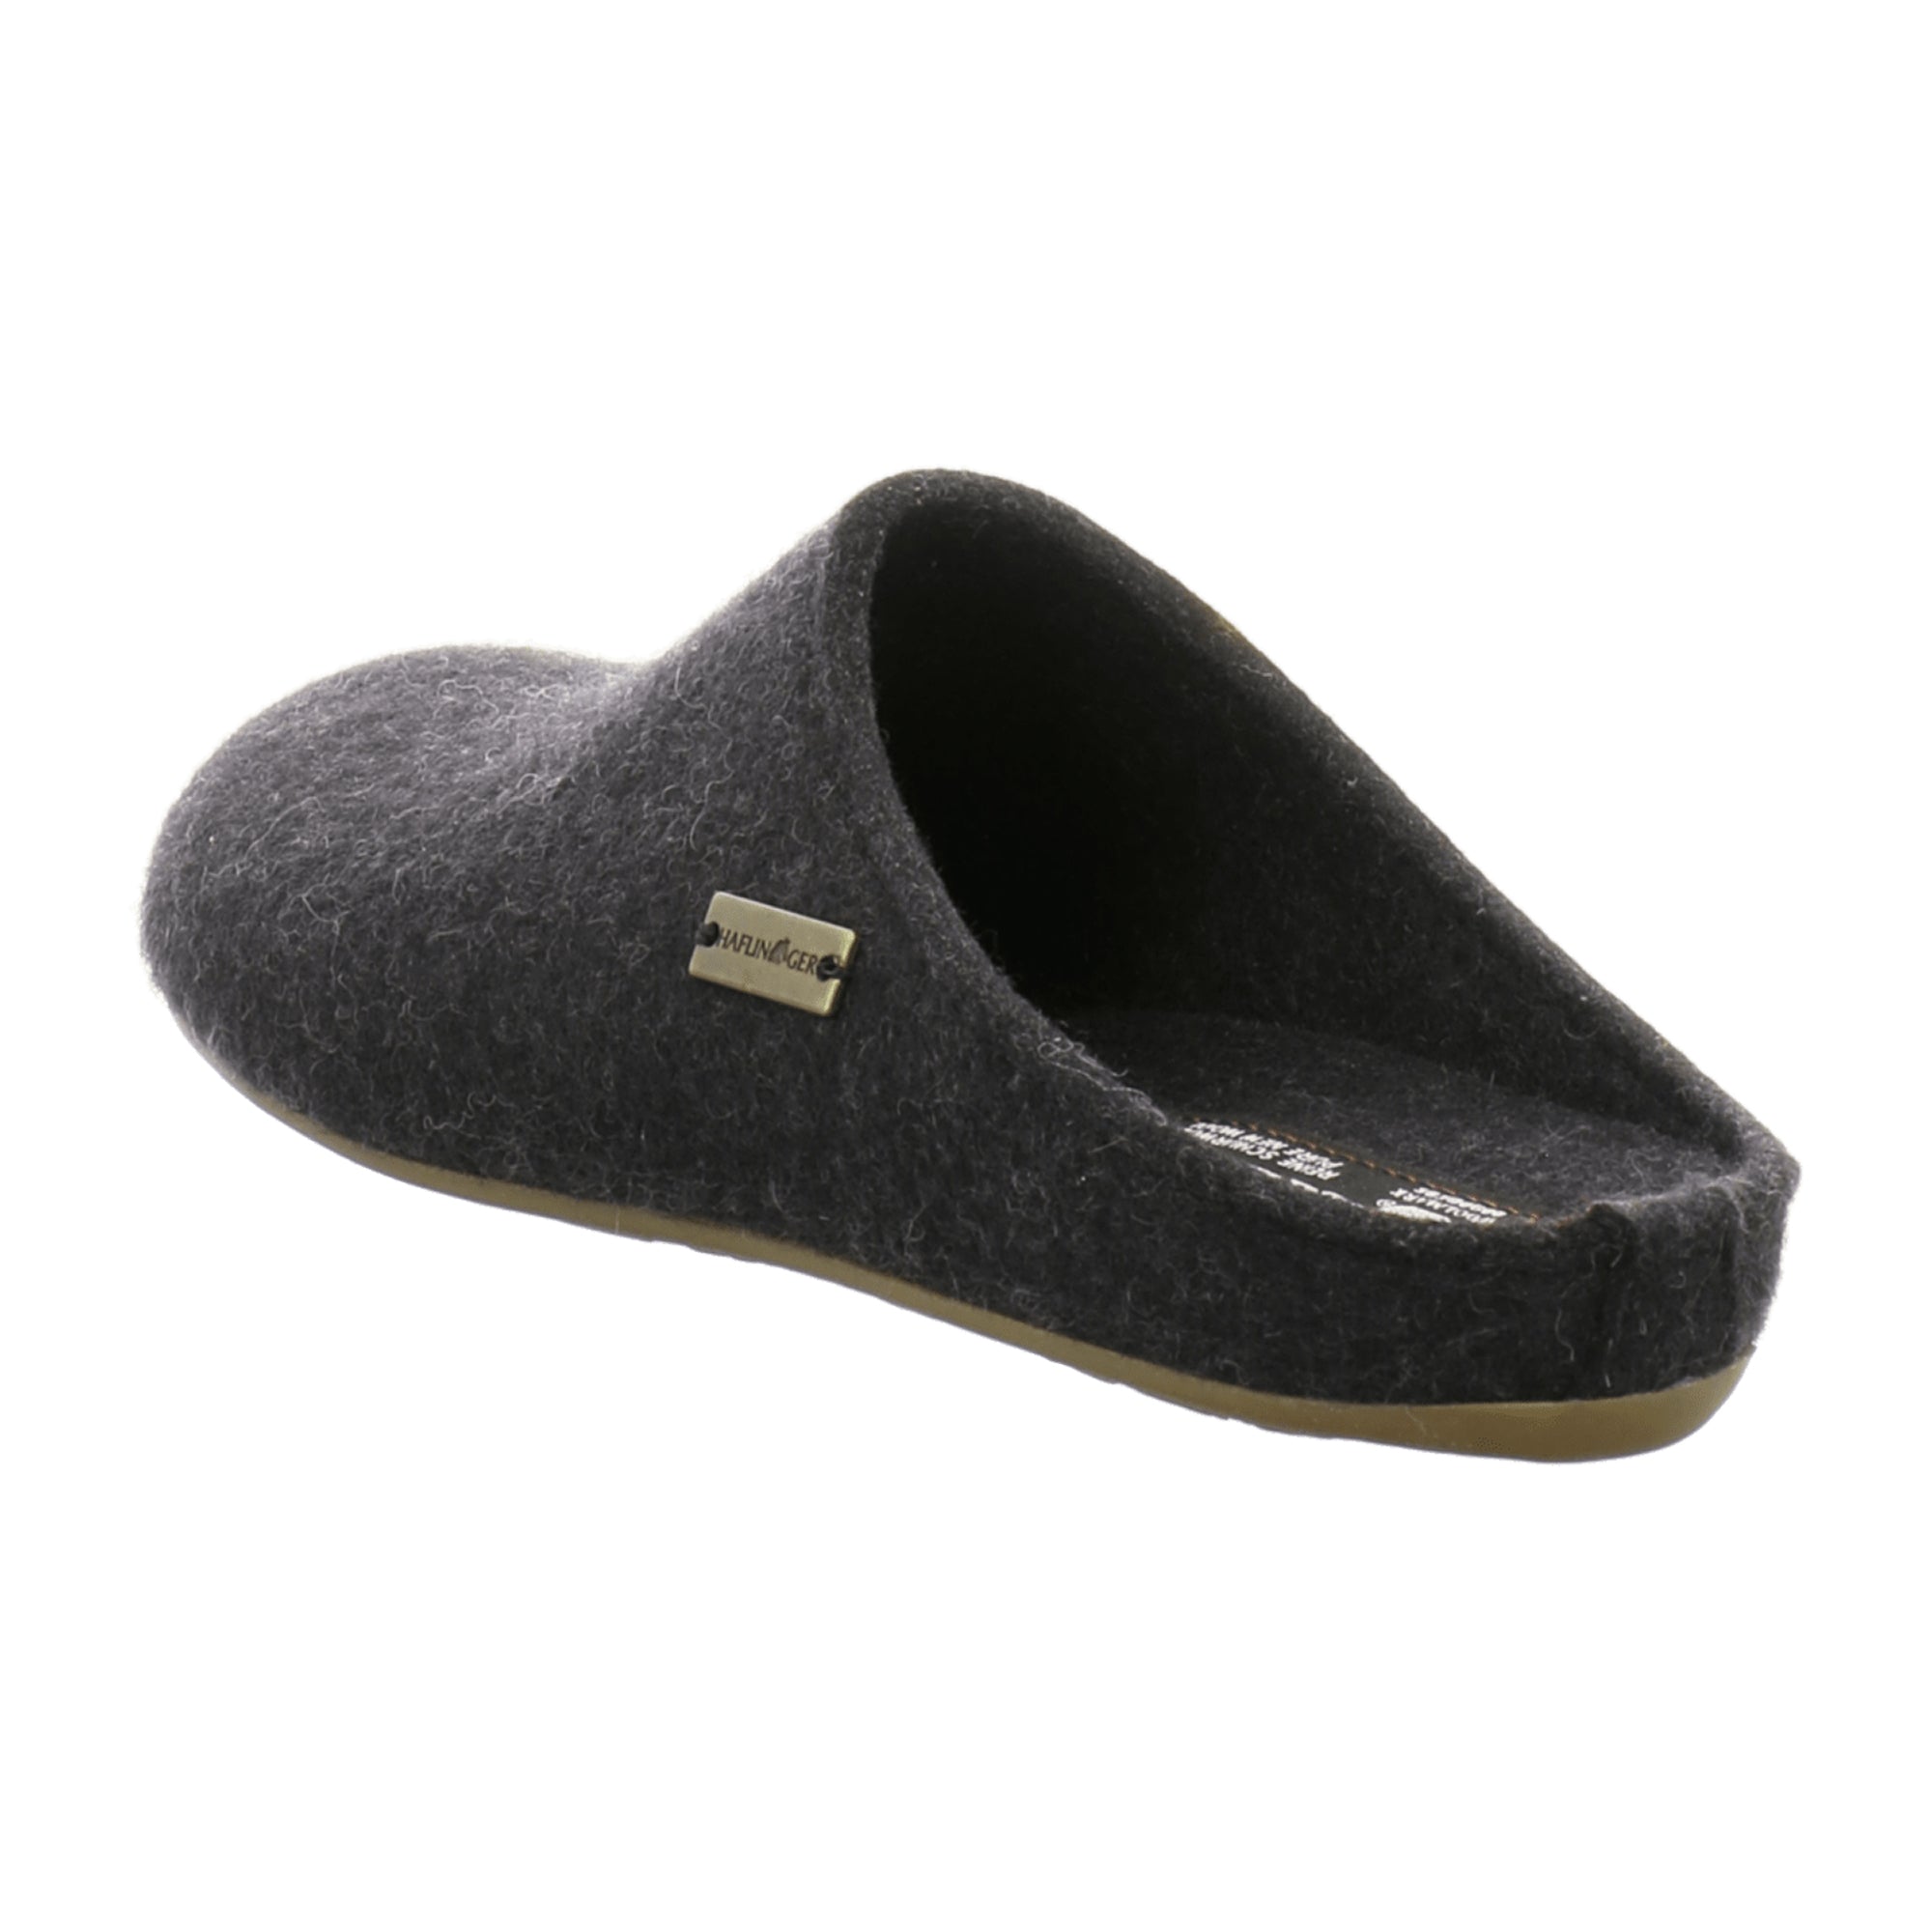 Haflinger Everest Fundus Men's Slippers, Grey - Comfortable & Durable